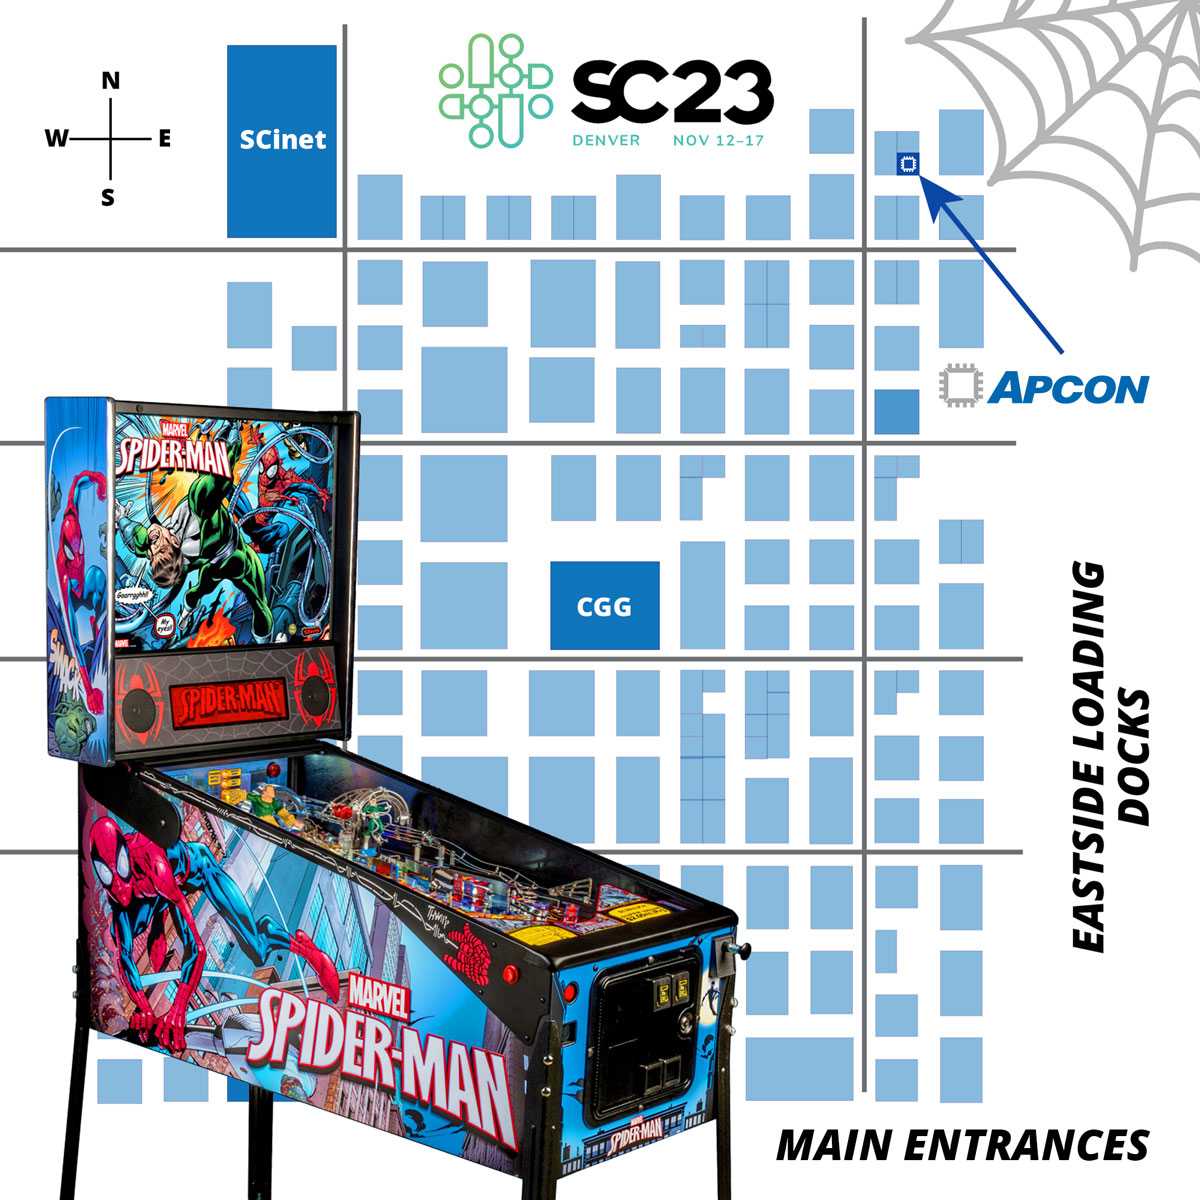 Play Spider-Man pinball at the APCON booth #2194 | Supercomputing Denver Show